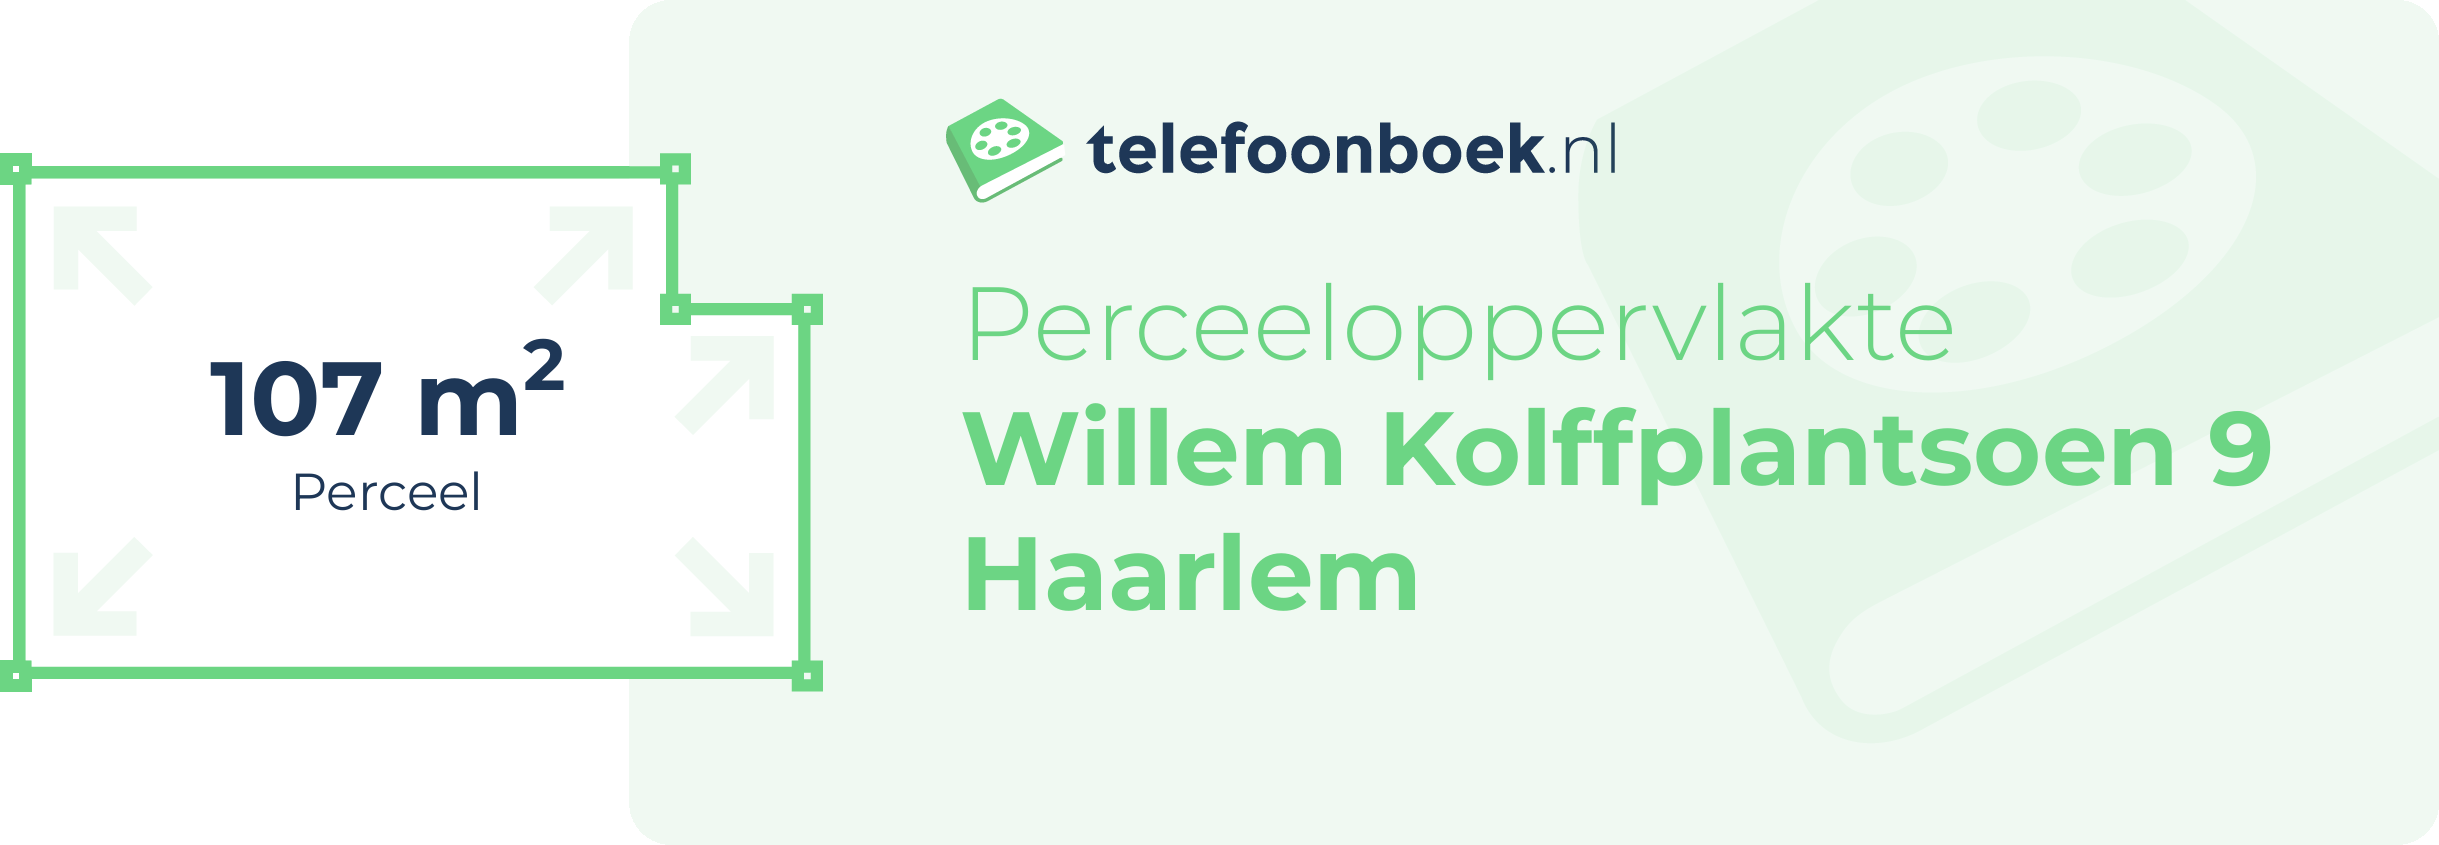 Perceeloppervlakte Willem Kolffplantsoen 9 Haarlem